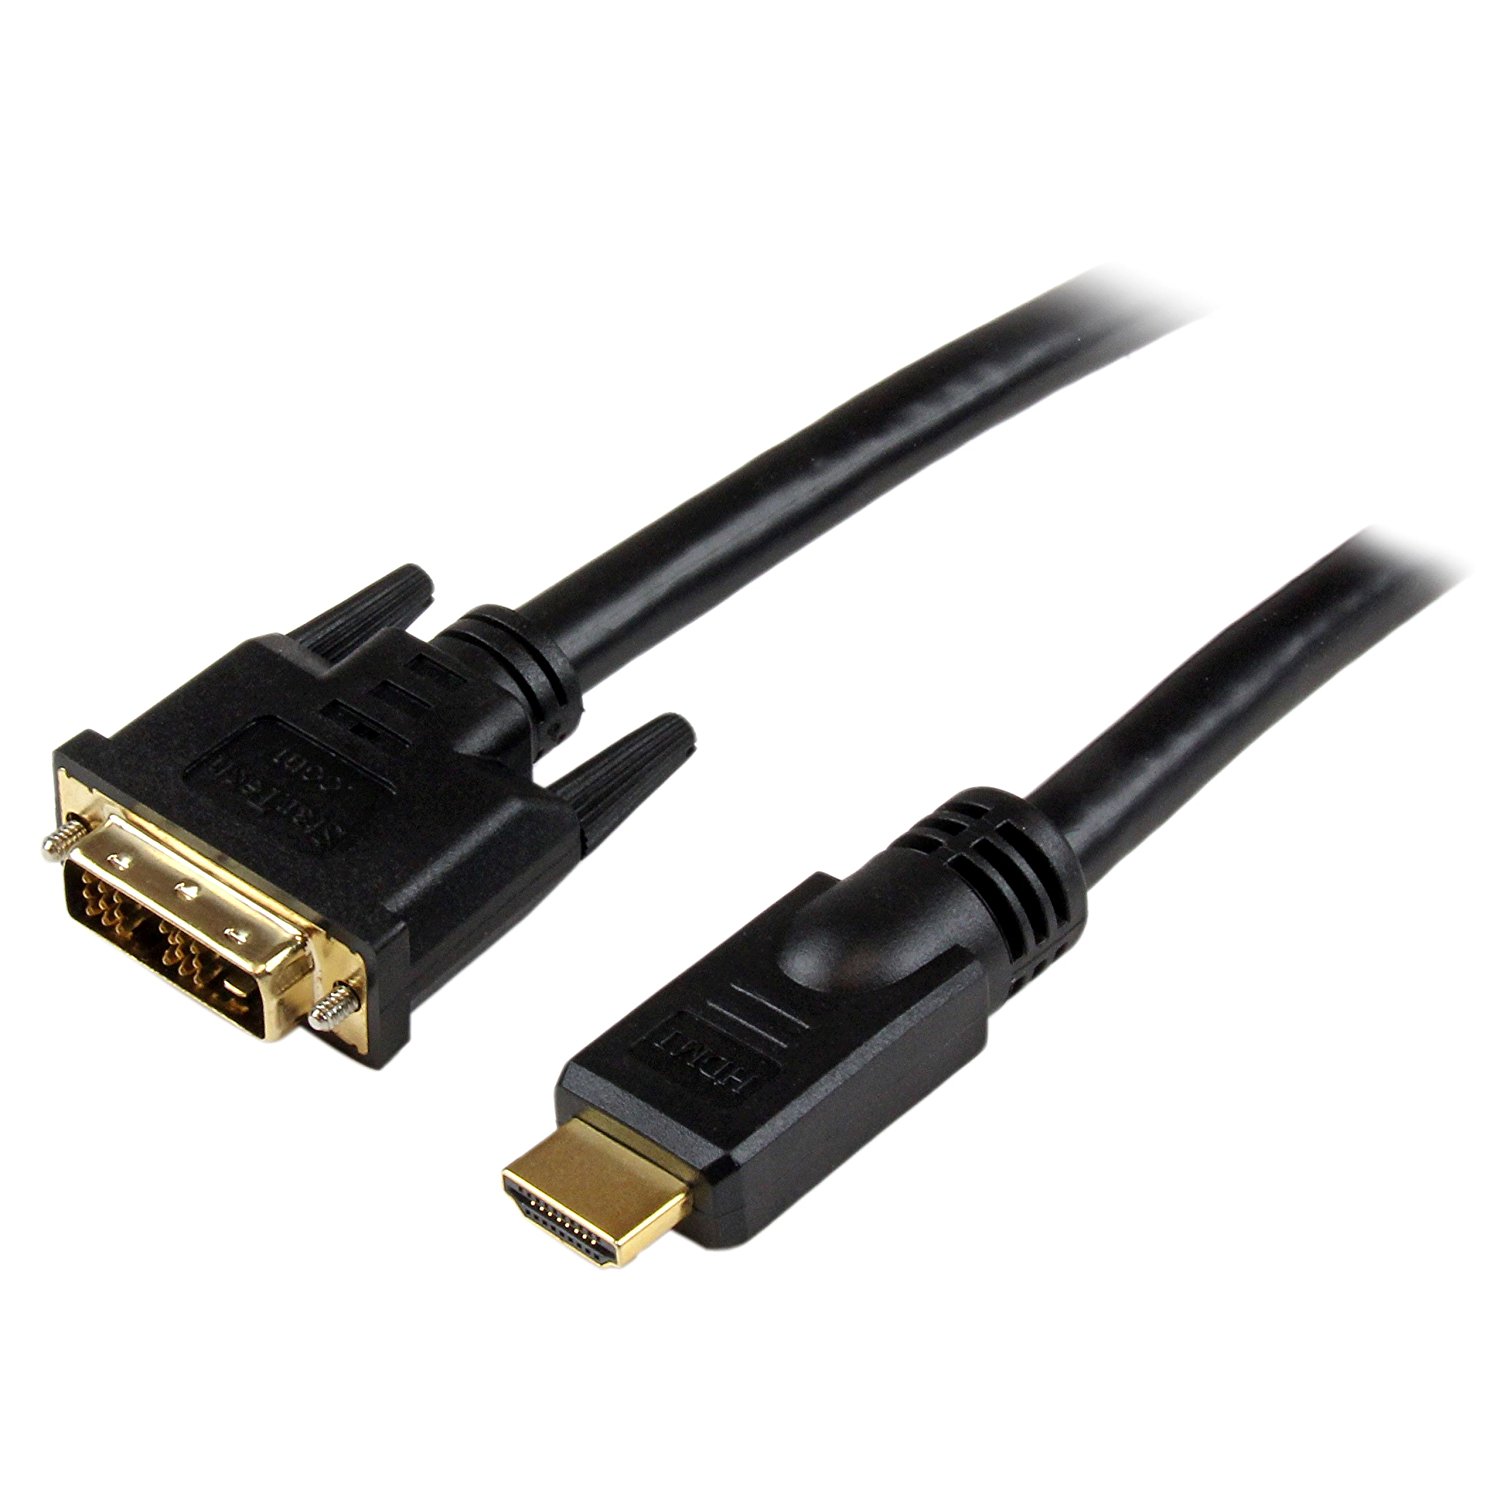 Amazon.com: StarTech.com 50 ft HDMI to DVI-D Cable - M/M: Home Audio ...